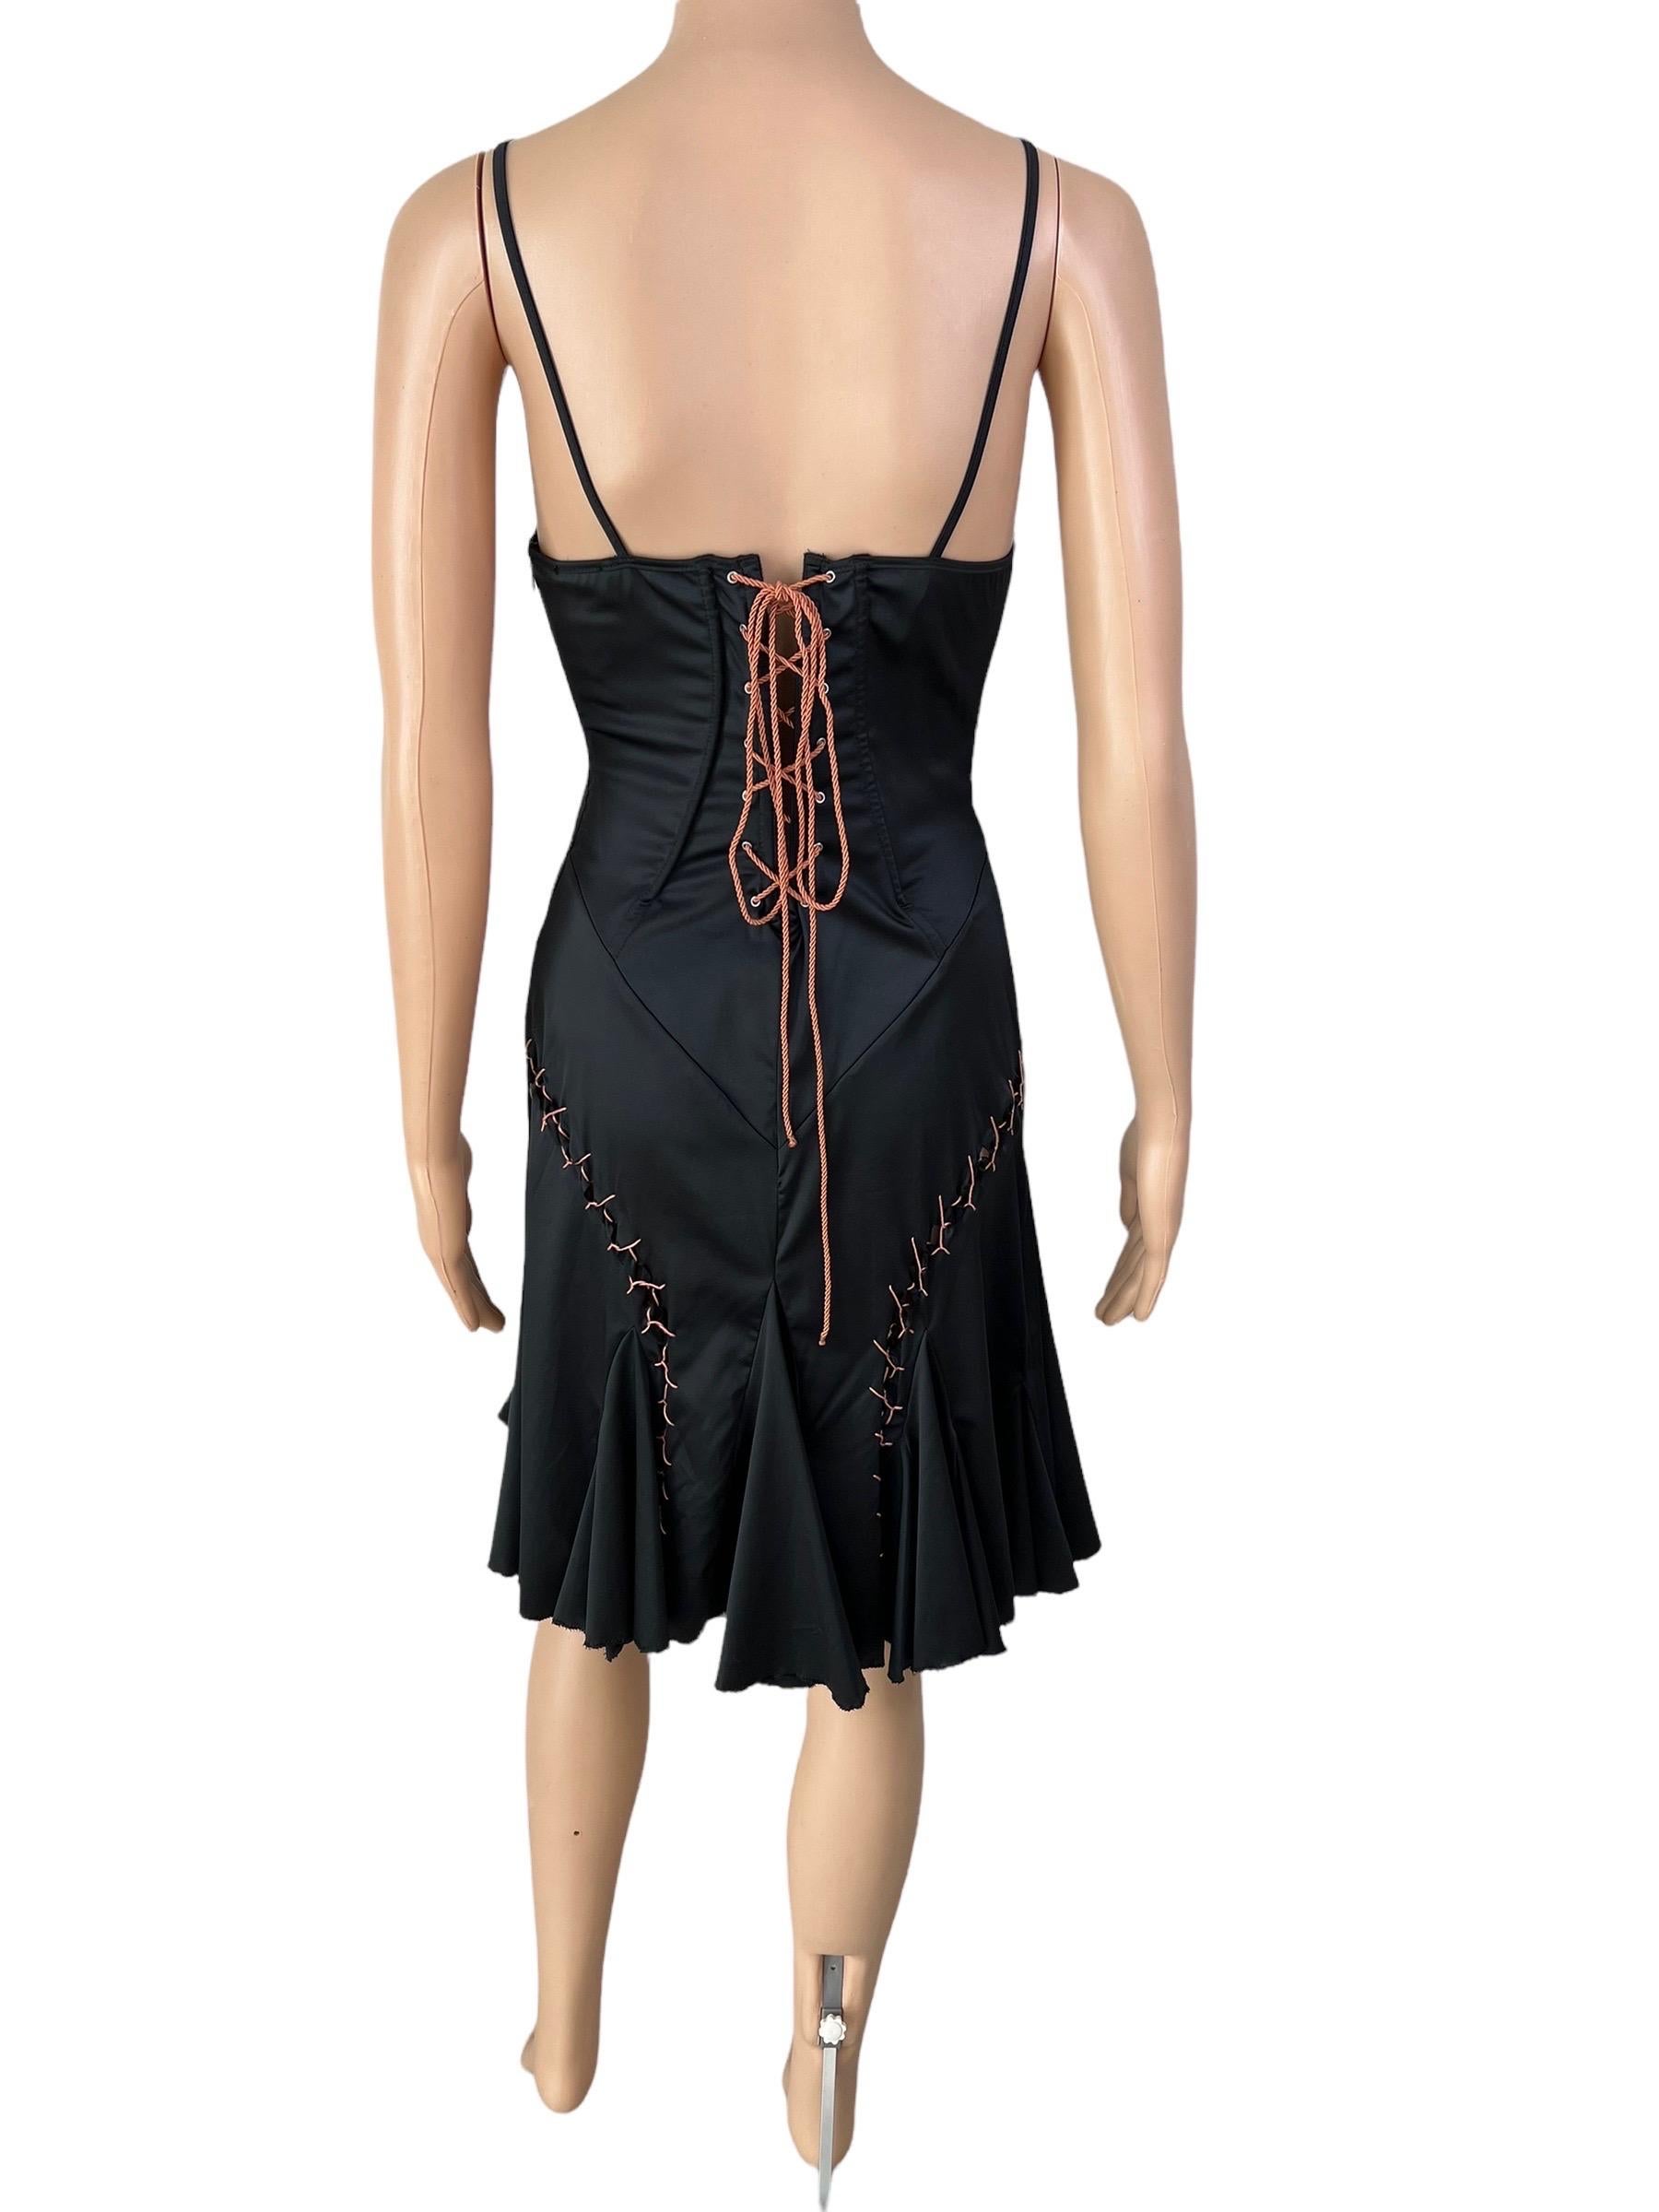 Roberto Cavalli Just Cavalli Lace Up Cutout Bustier Black Mini Dress For Sale 2